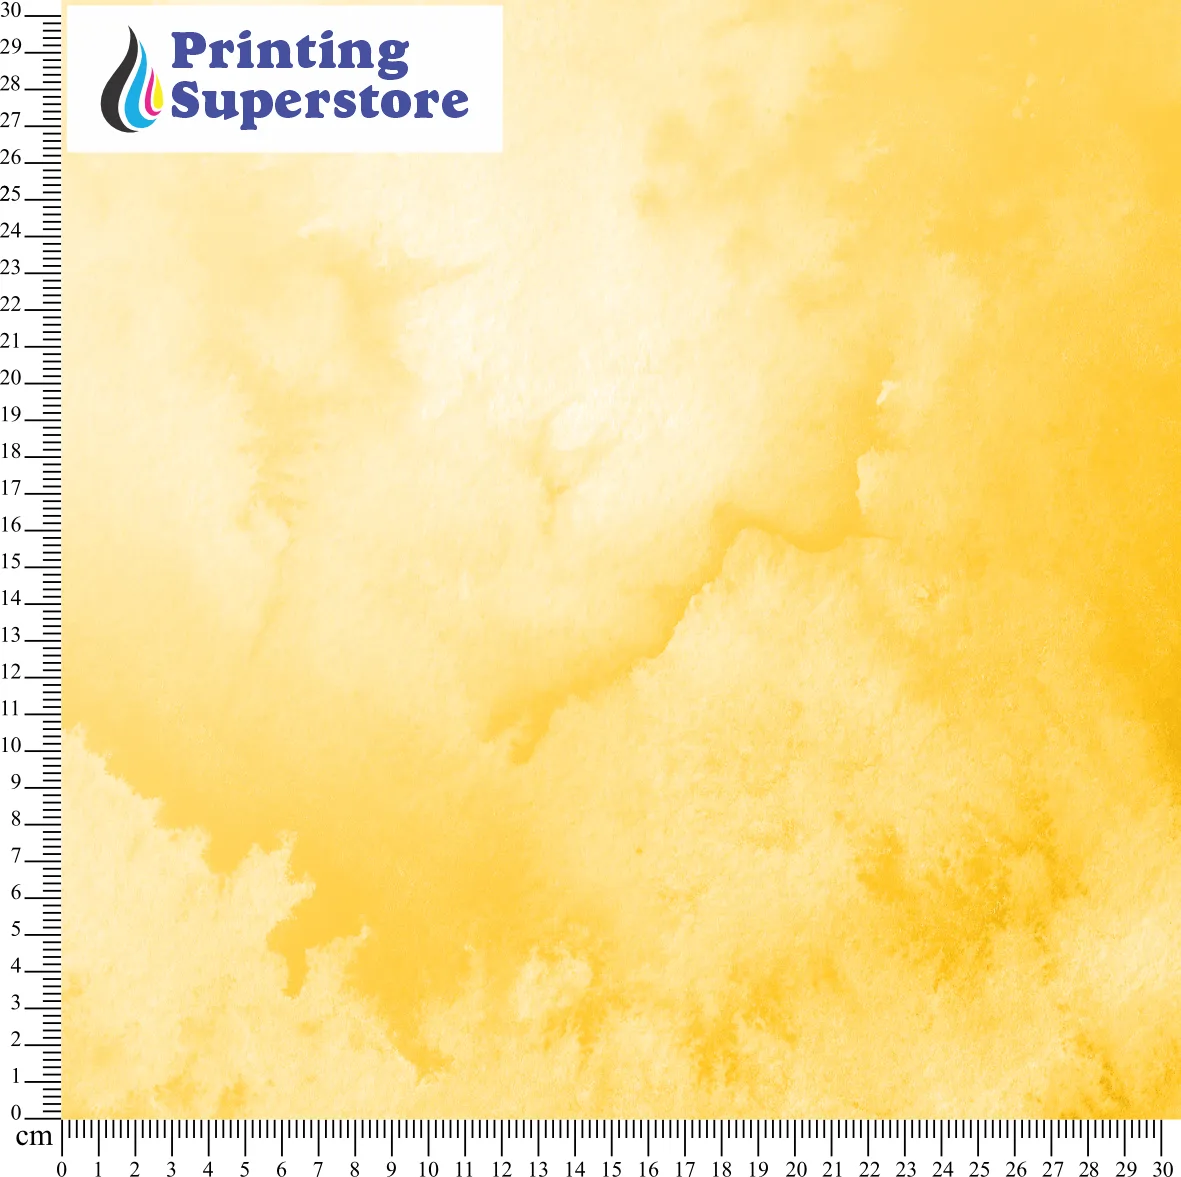 Yellow Watercolour theme pattern printed on Self Adhesive Vinyl (SAV), Heat Transfer Vinyl (HTV) and Cardstock.